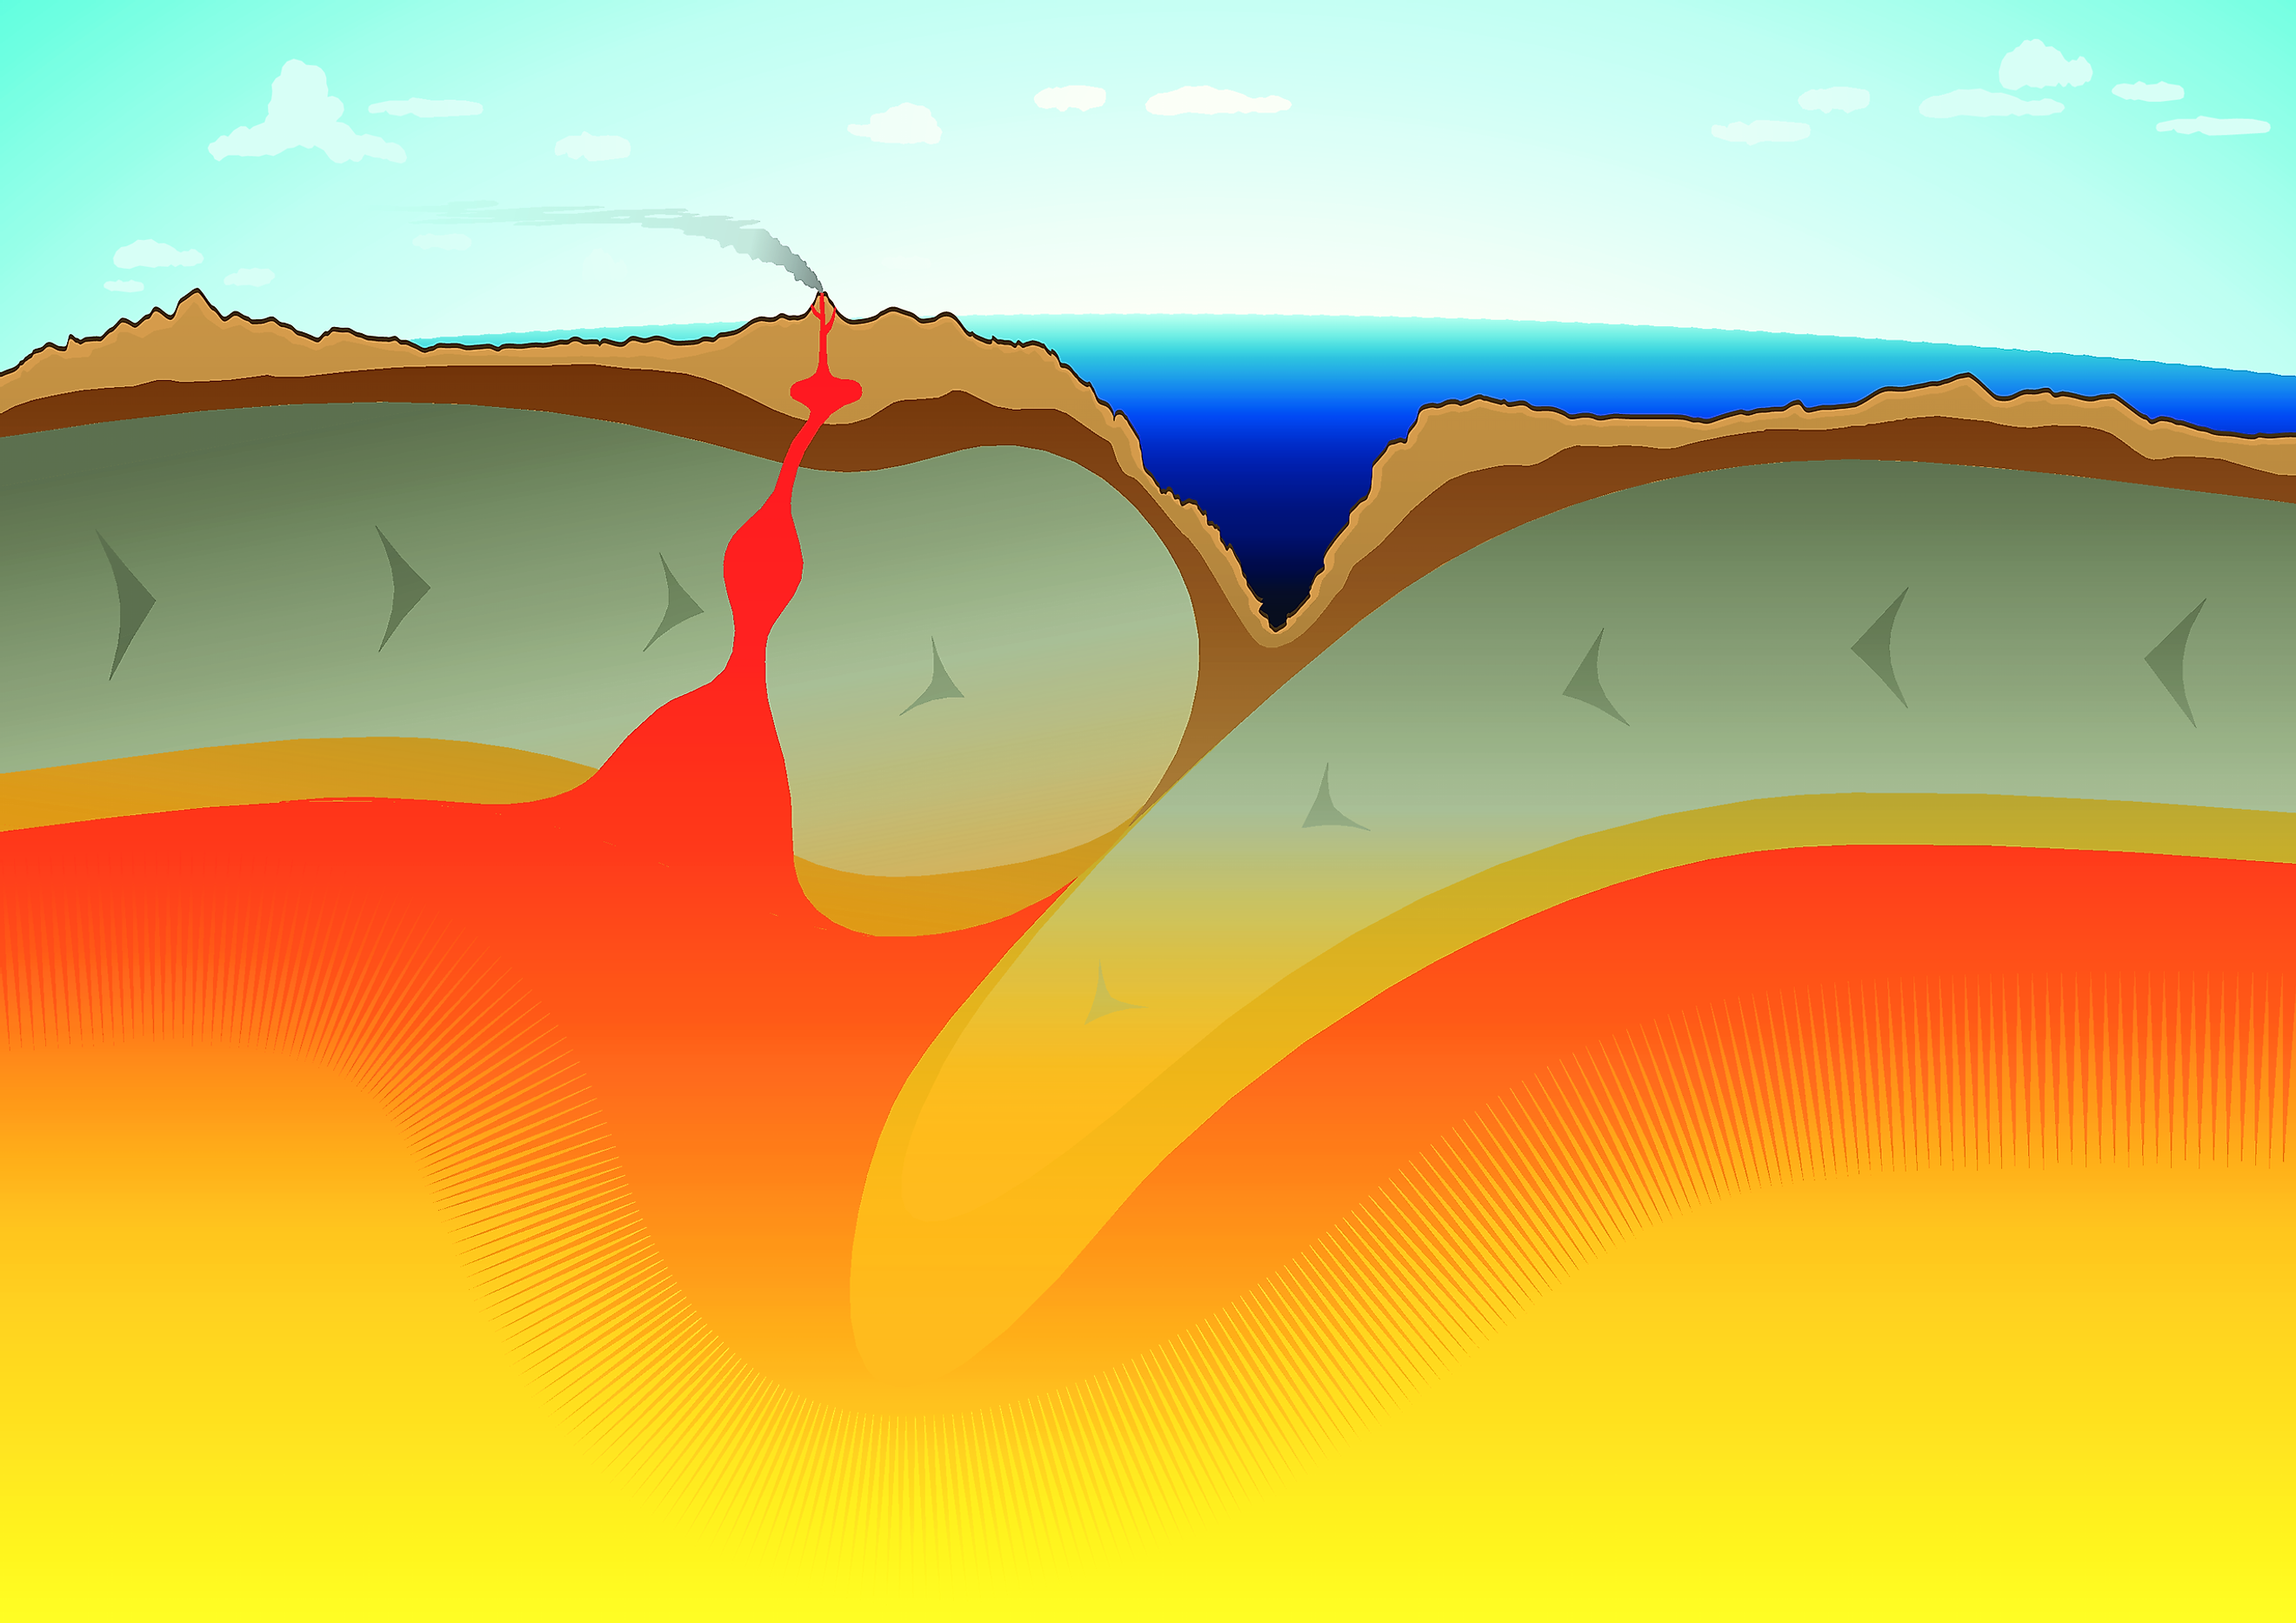 A subduction zone